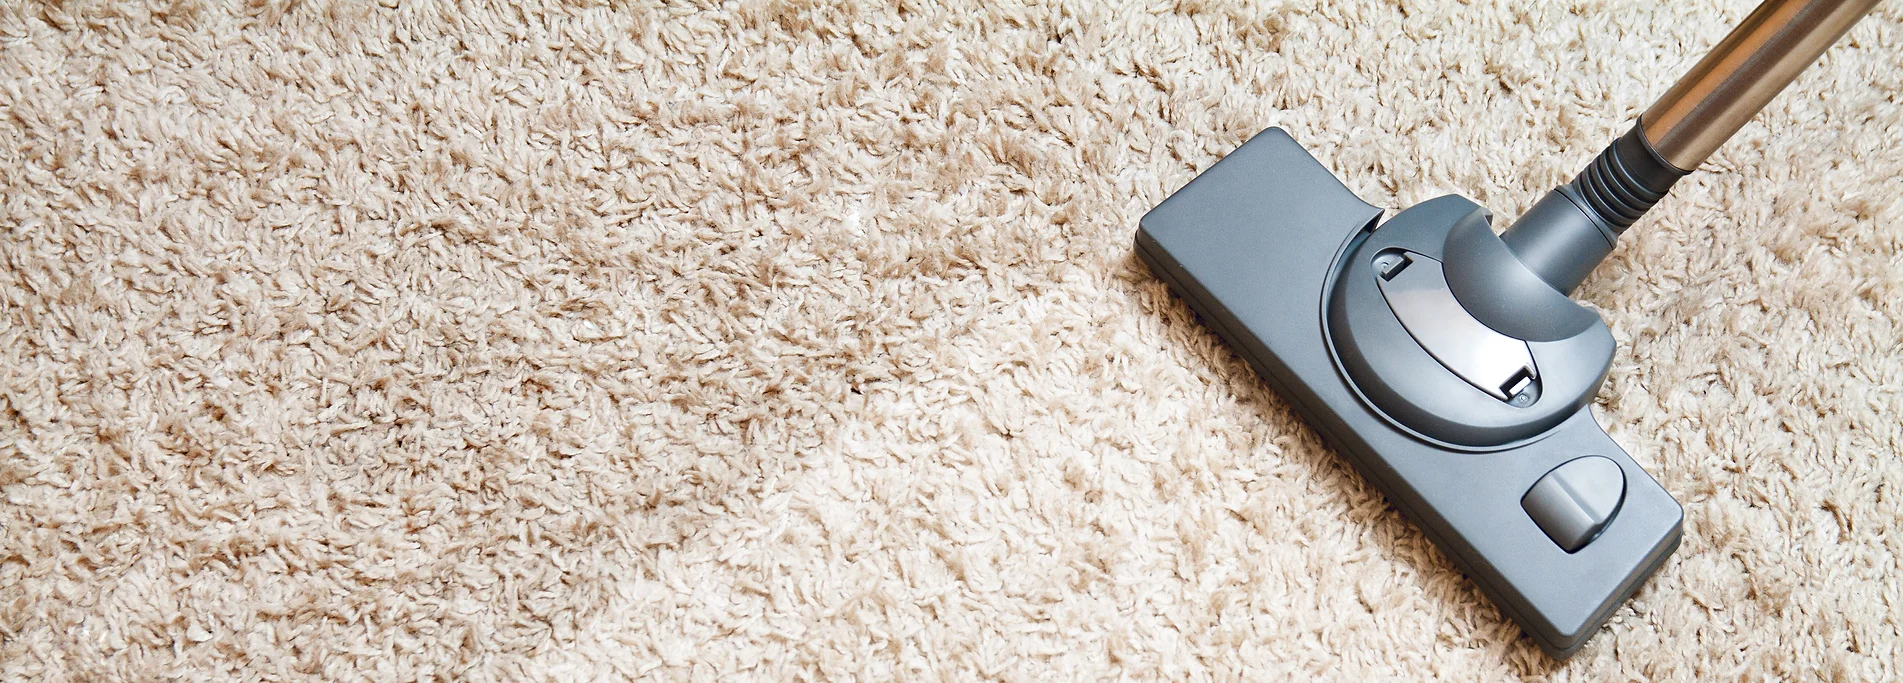 a black rectangular object on a carpet